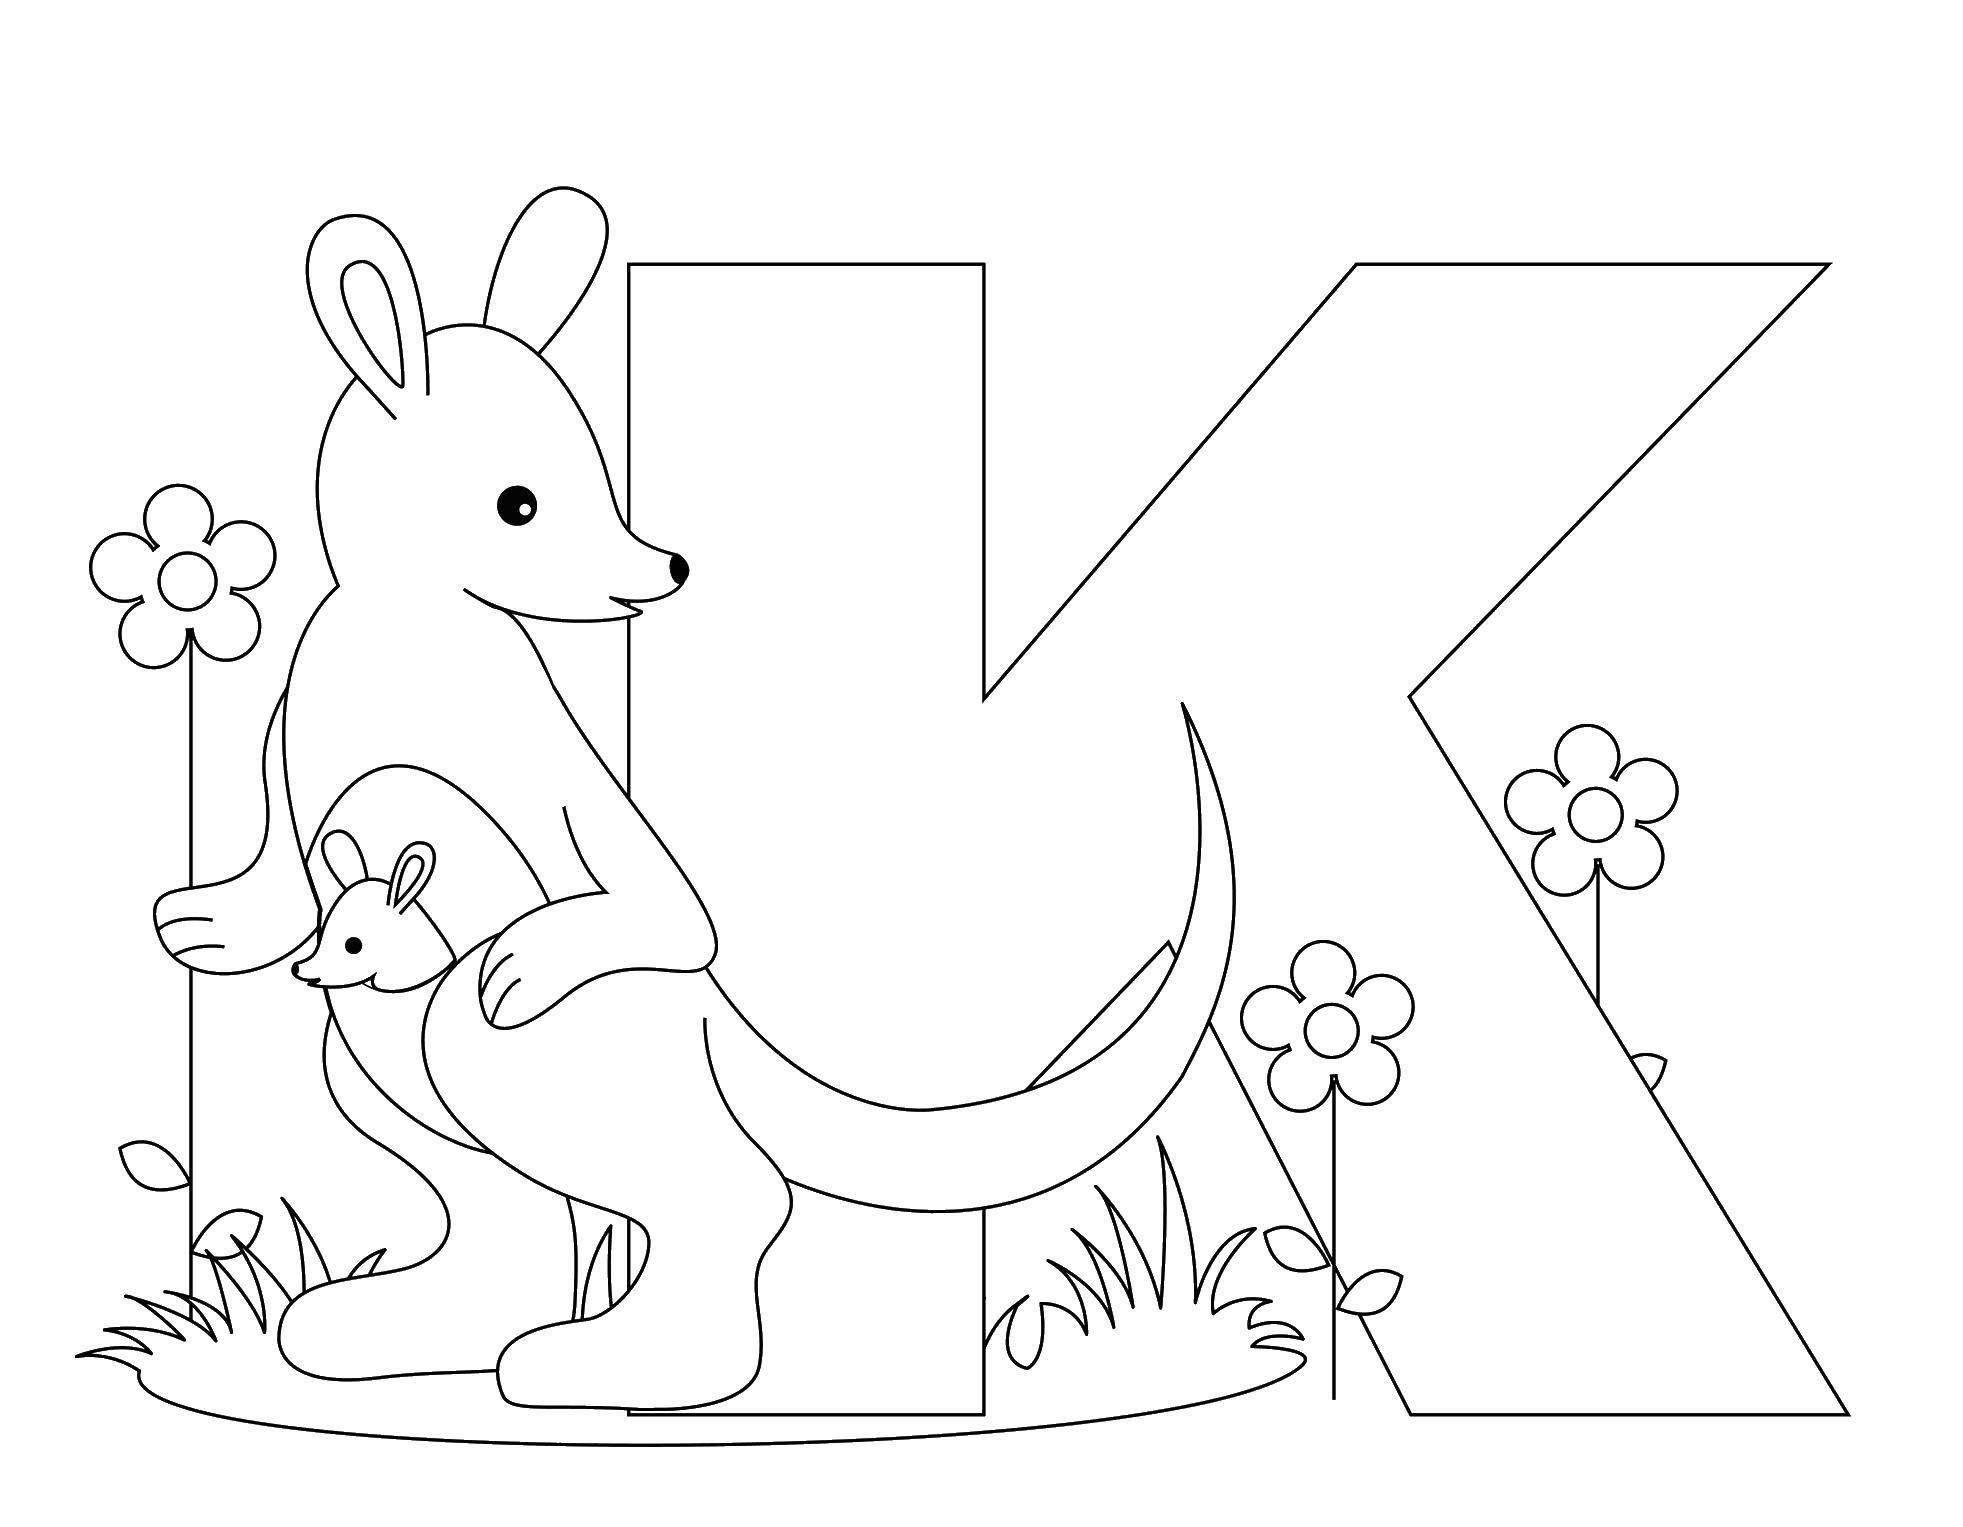 Coloring Kangaroo in English. Category English. Tags:  English, kangaroo.